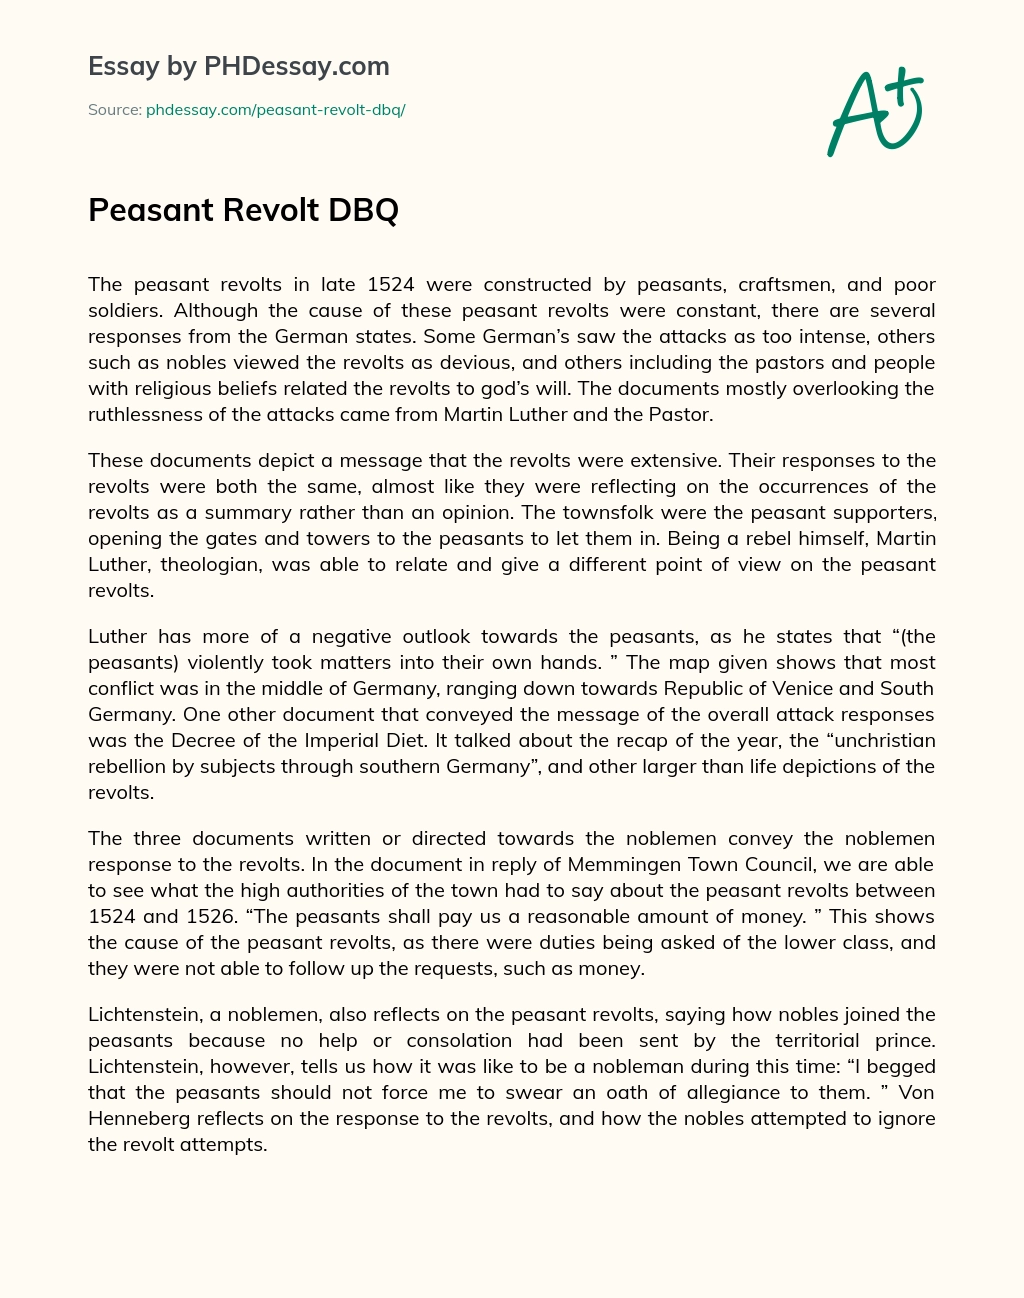 Peasant Revolt DBQ essay